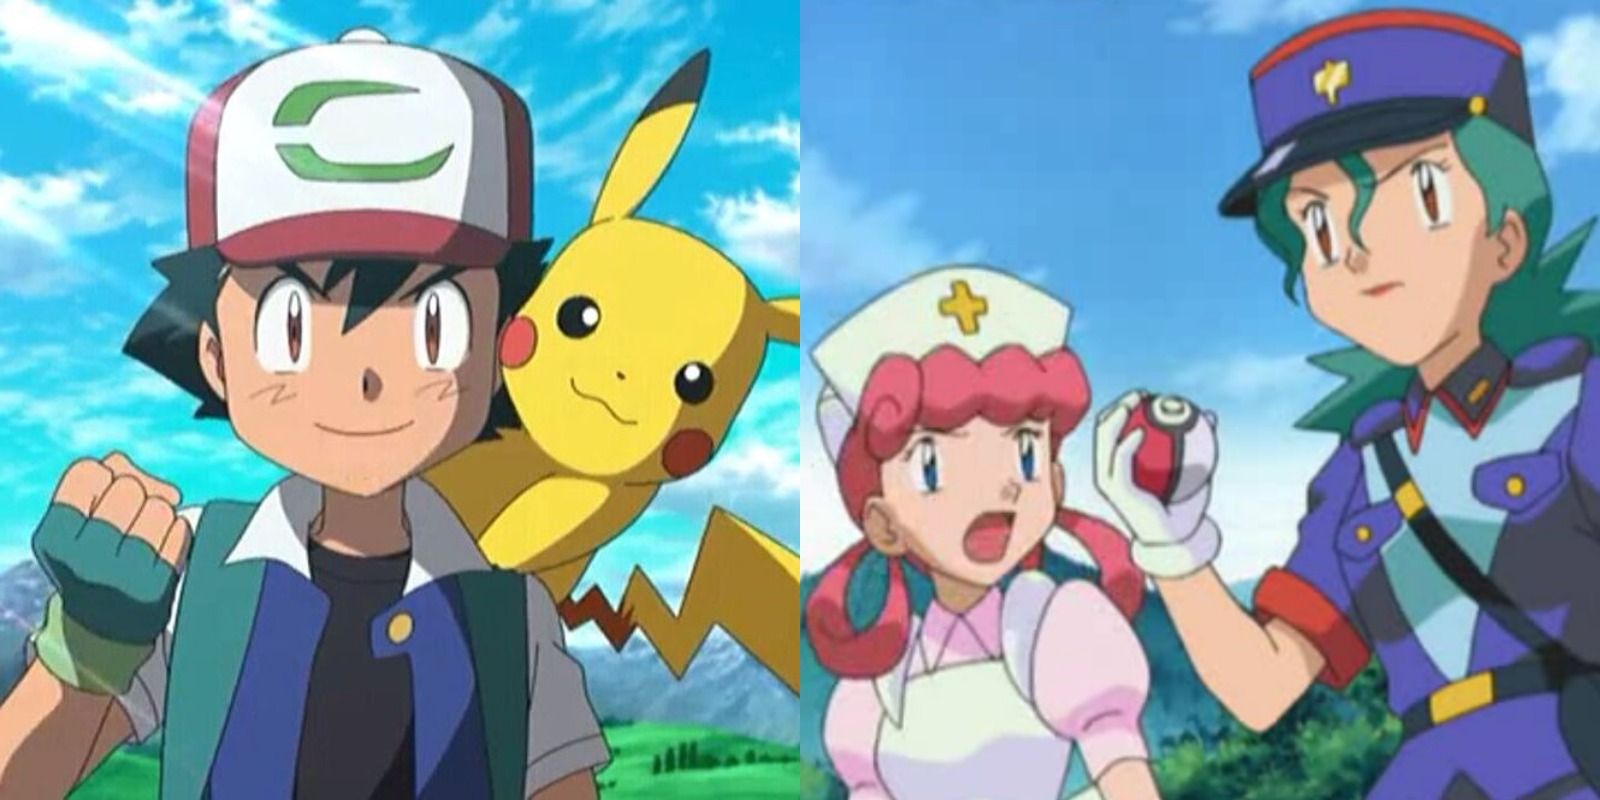 Ash and Pikachu and Officer Jenny and Nurse Joy in the Pokémon anime